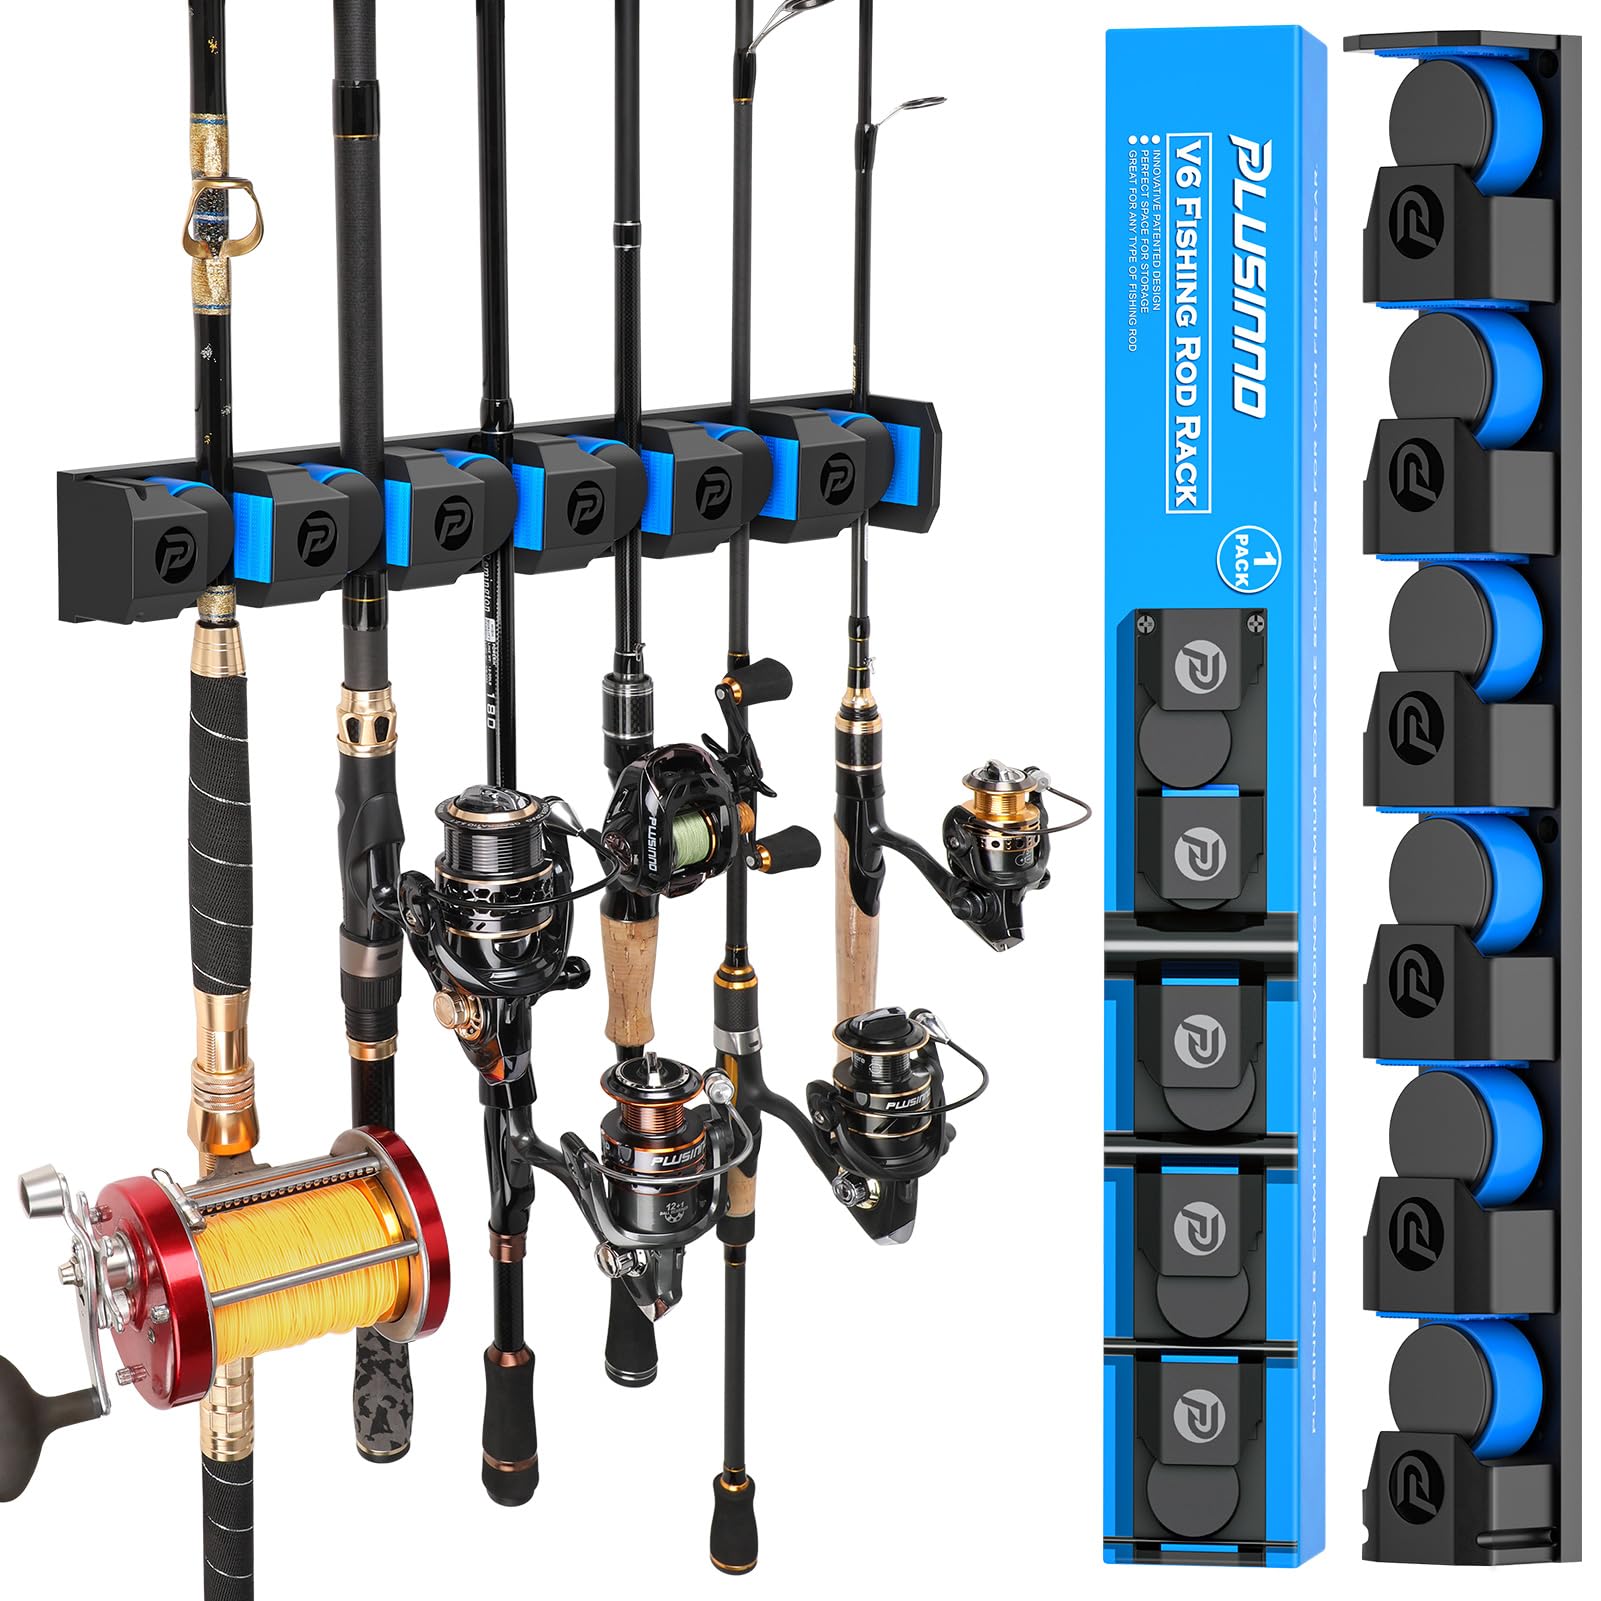 PLUSINNO V6 Fishing Rods Holder Vertical Wall Mount Fishing Rod